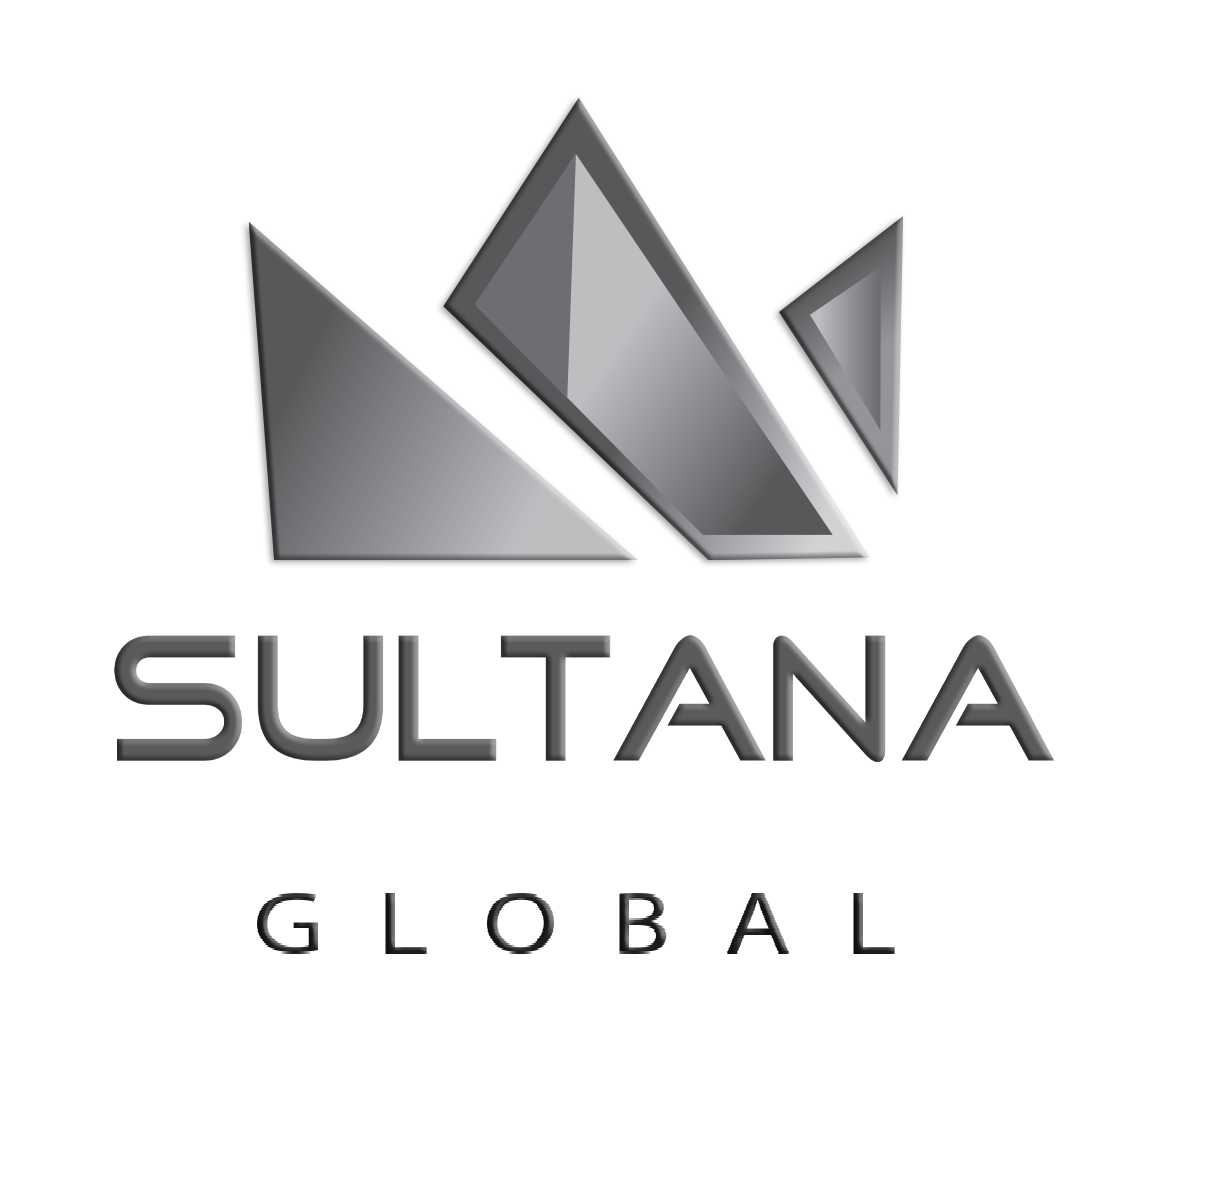 Sultana Global